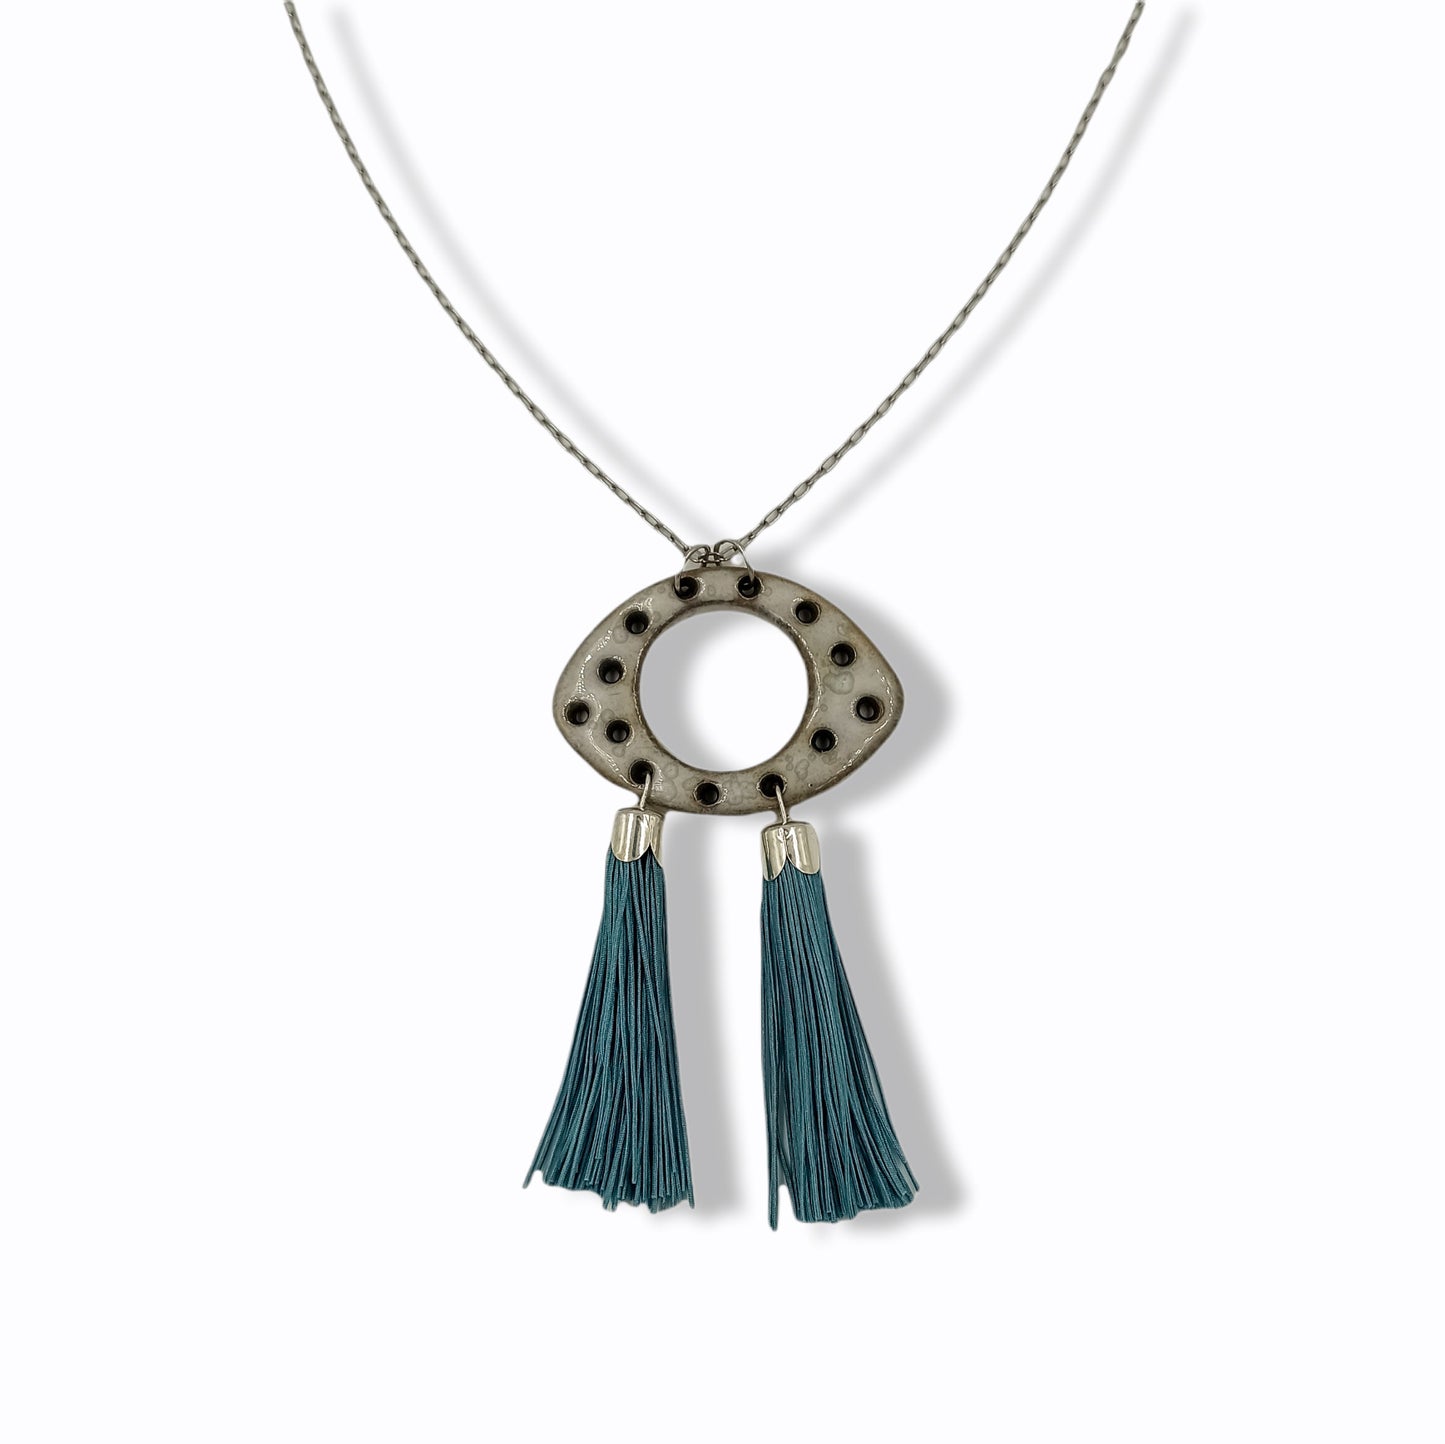 Long ceramic necklace in earthy tones